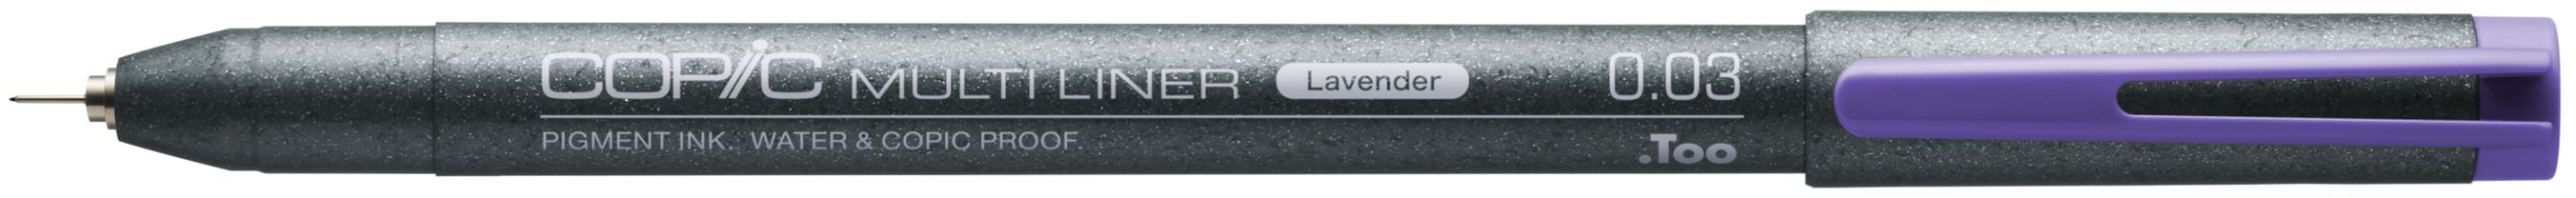 COPIC Multiliner 0.03mm 22075545 lavender